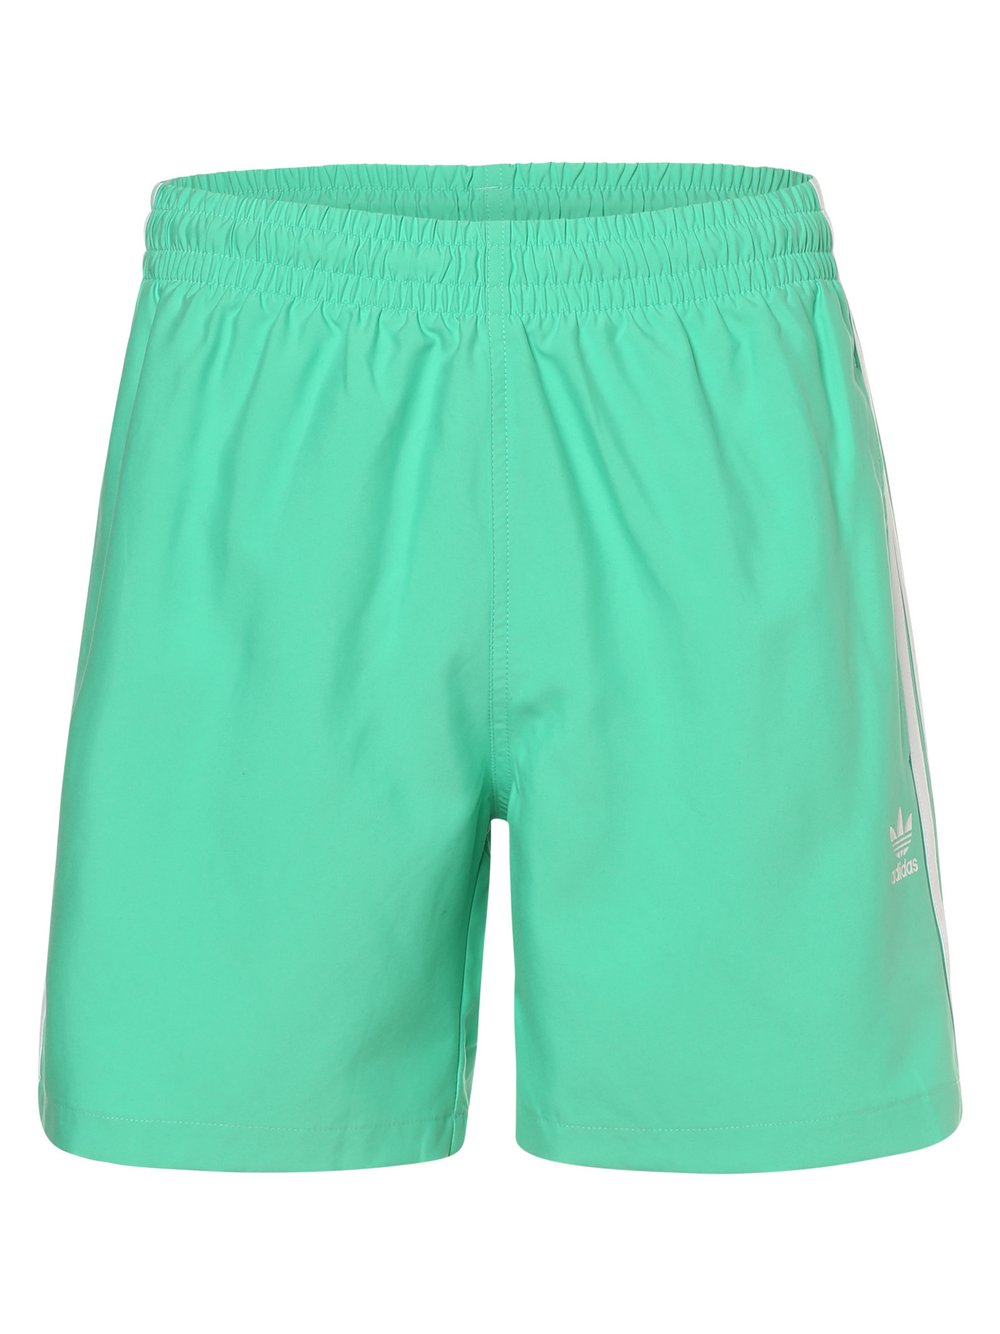 Adidas Originals - Męskie spodenki kąpielowe, zielony